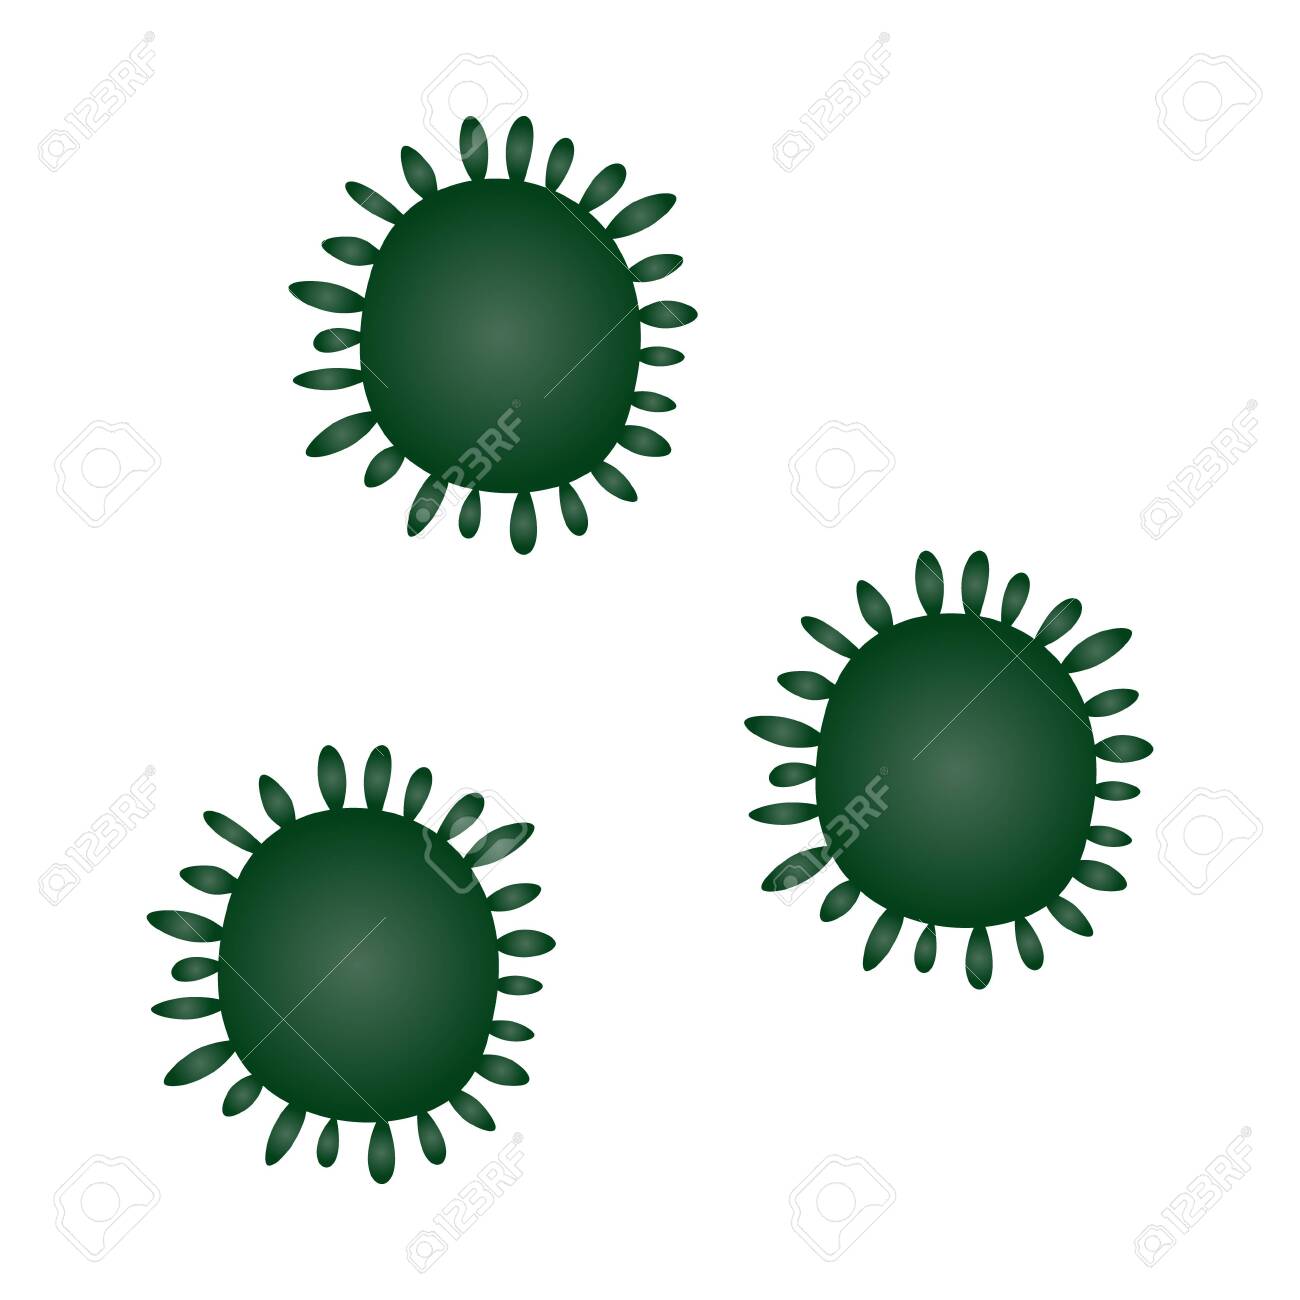 Covid 19 Coronavirus vector